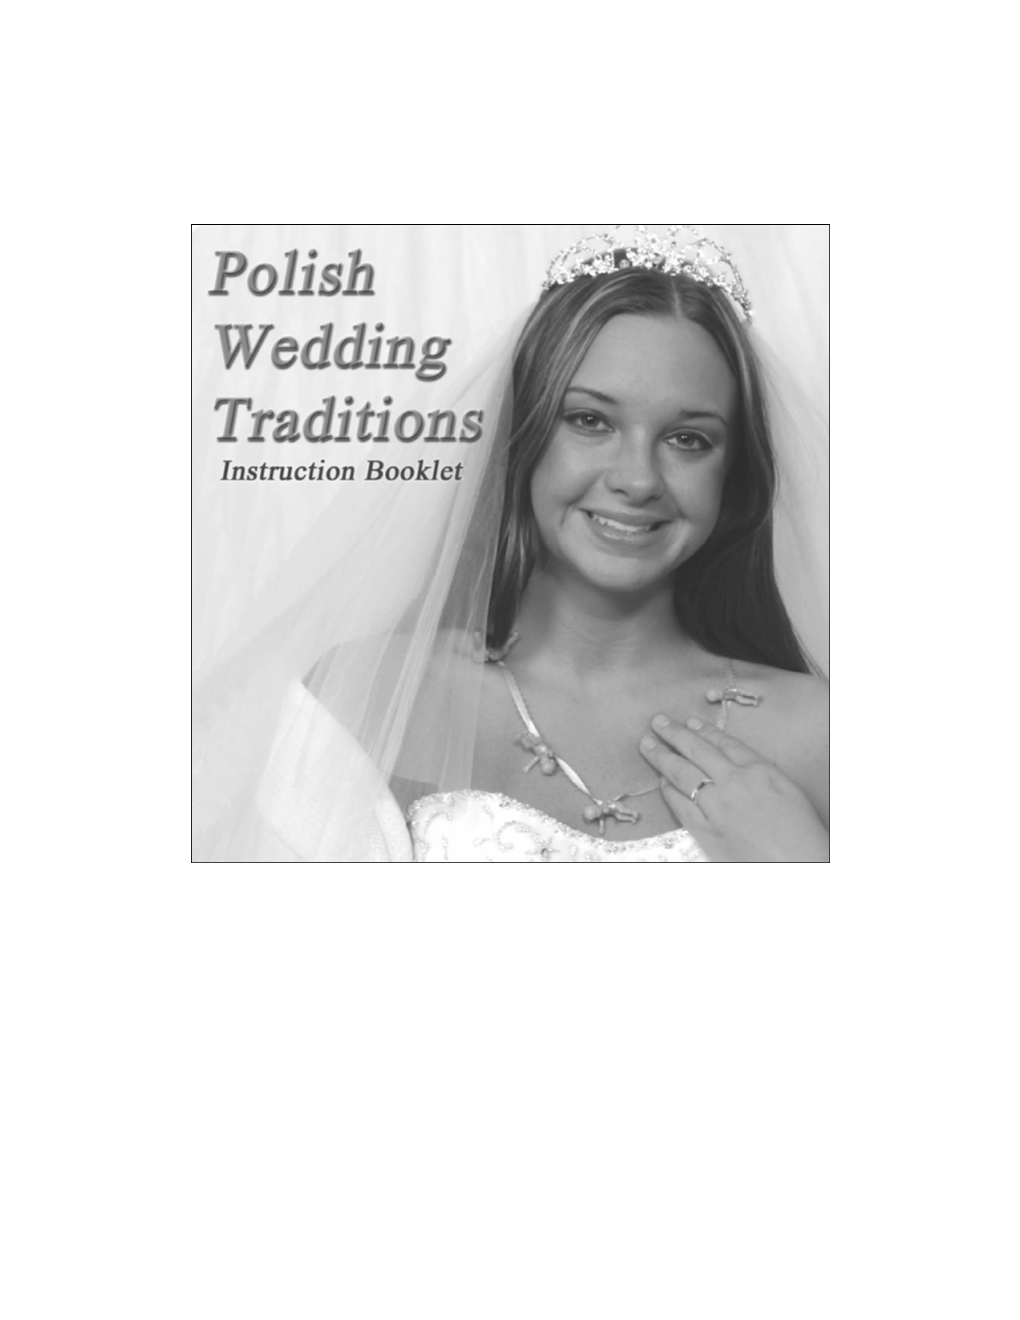 Polish Wedding Traditions Instruction Booklet